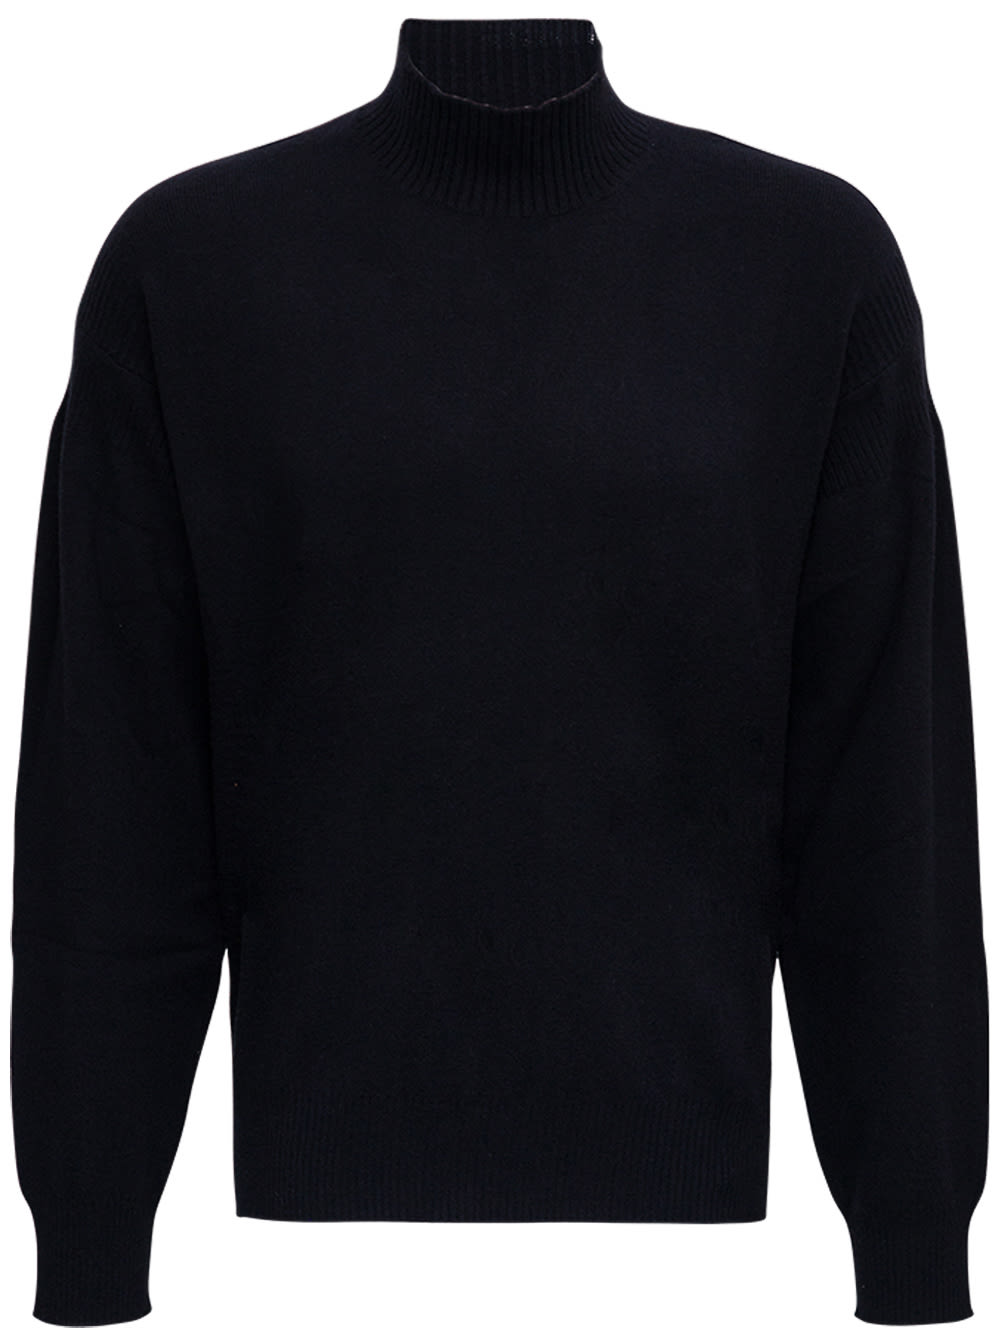 Z Zegna High Neck Black Wool Sweater